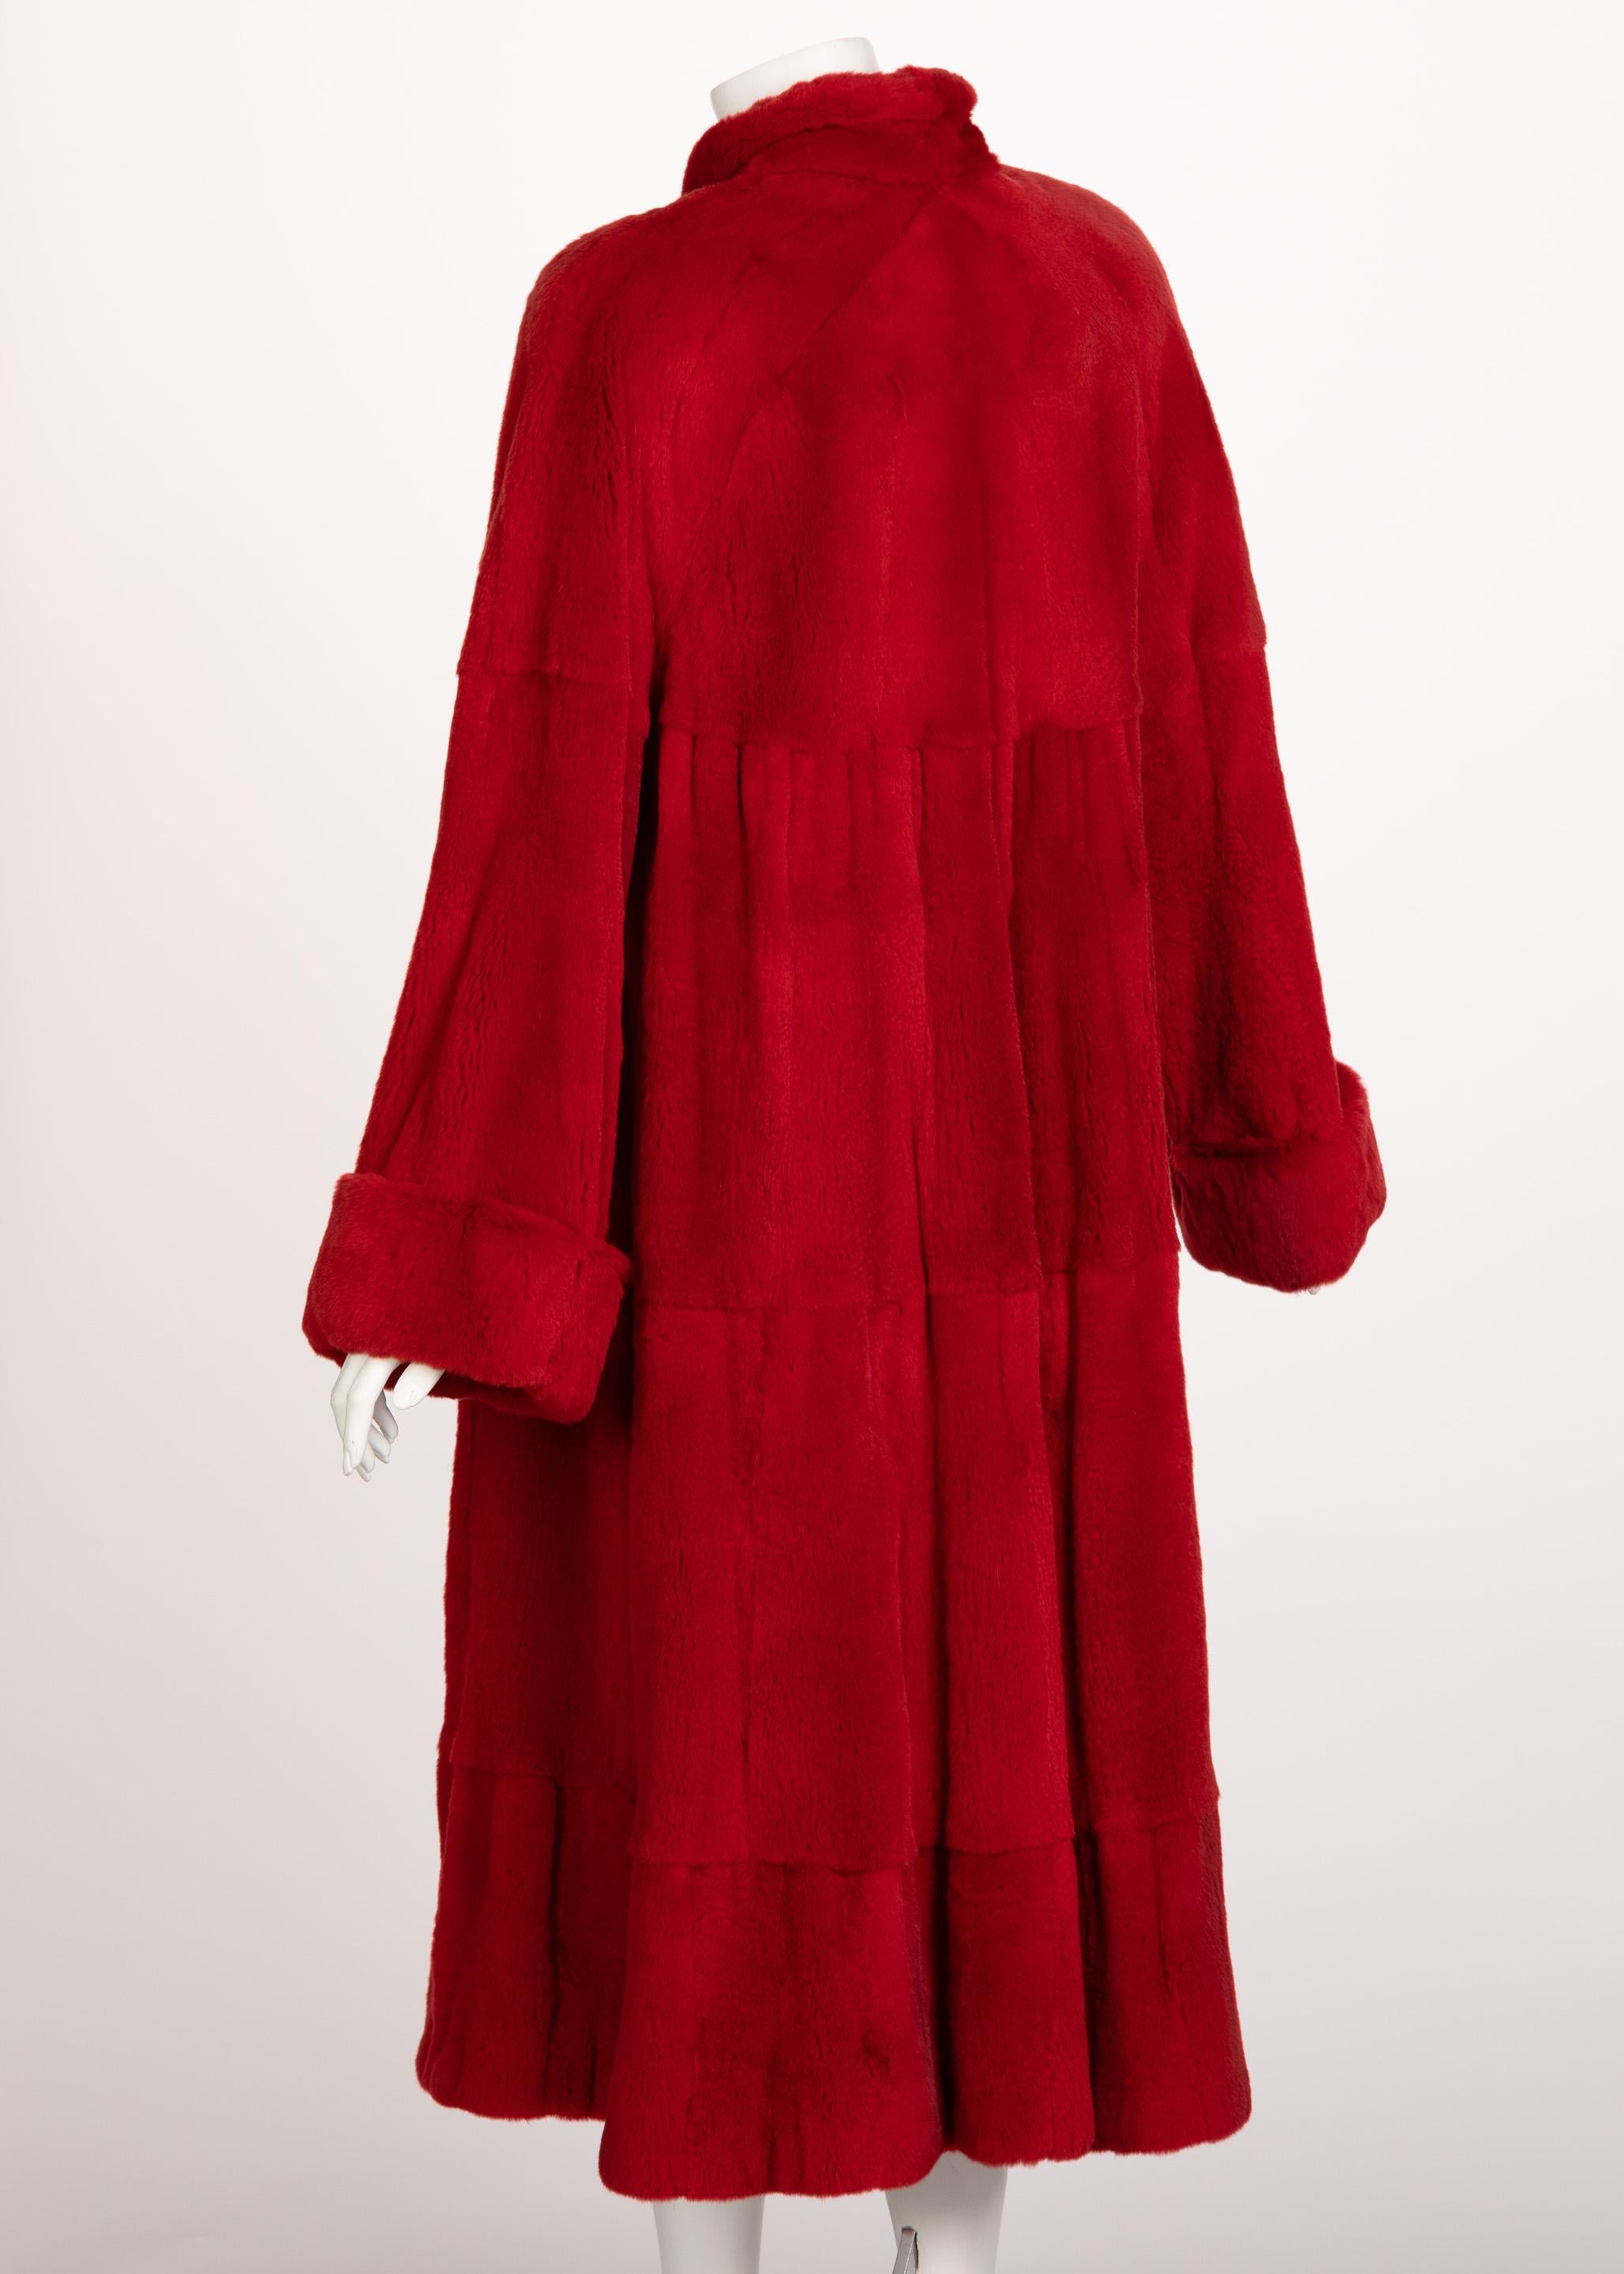 red mink coat